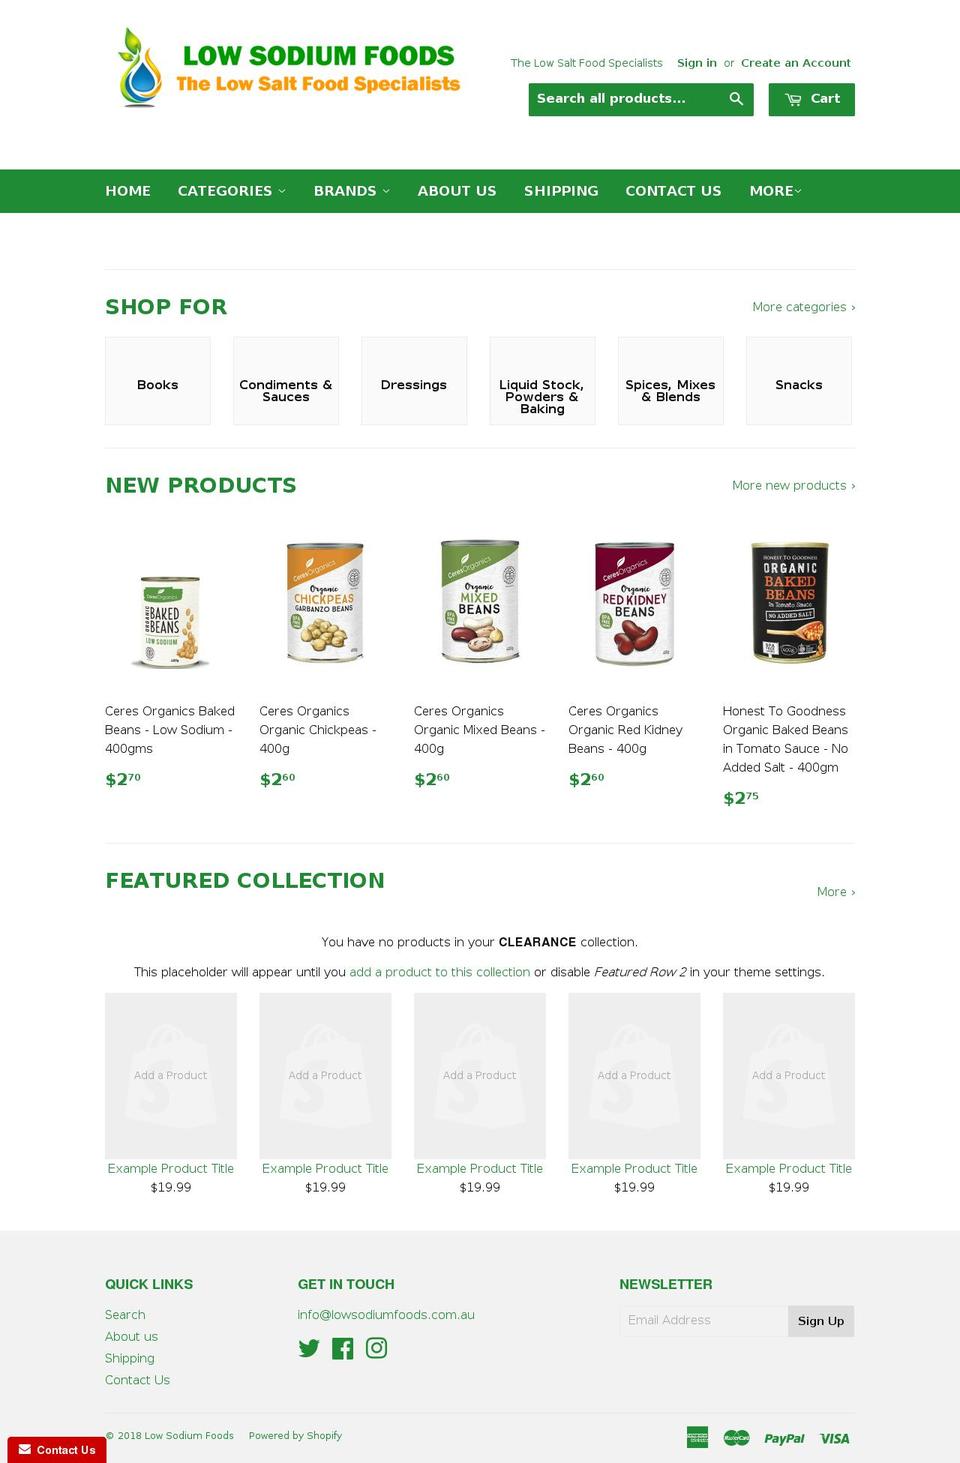 lowsodiumfoods.com.au shopify website screenshot